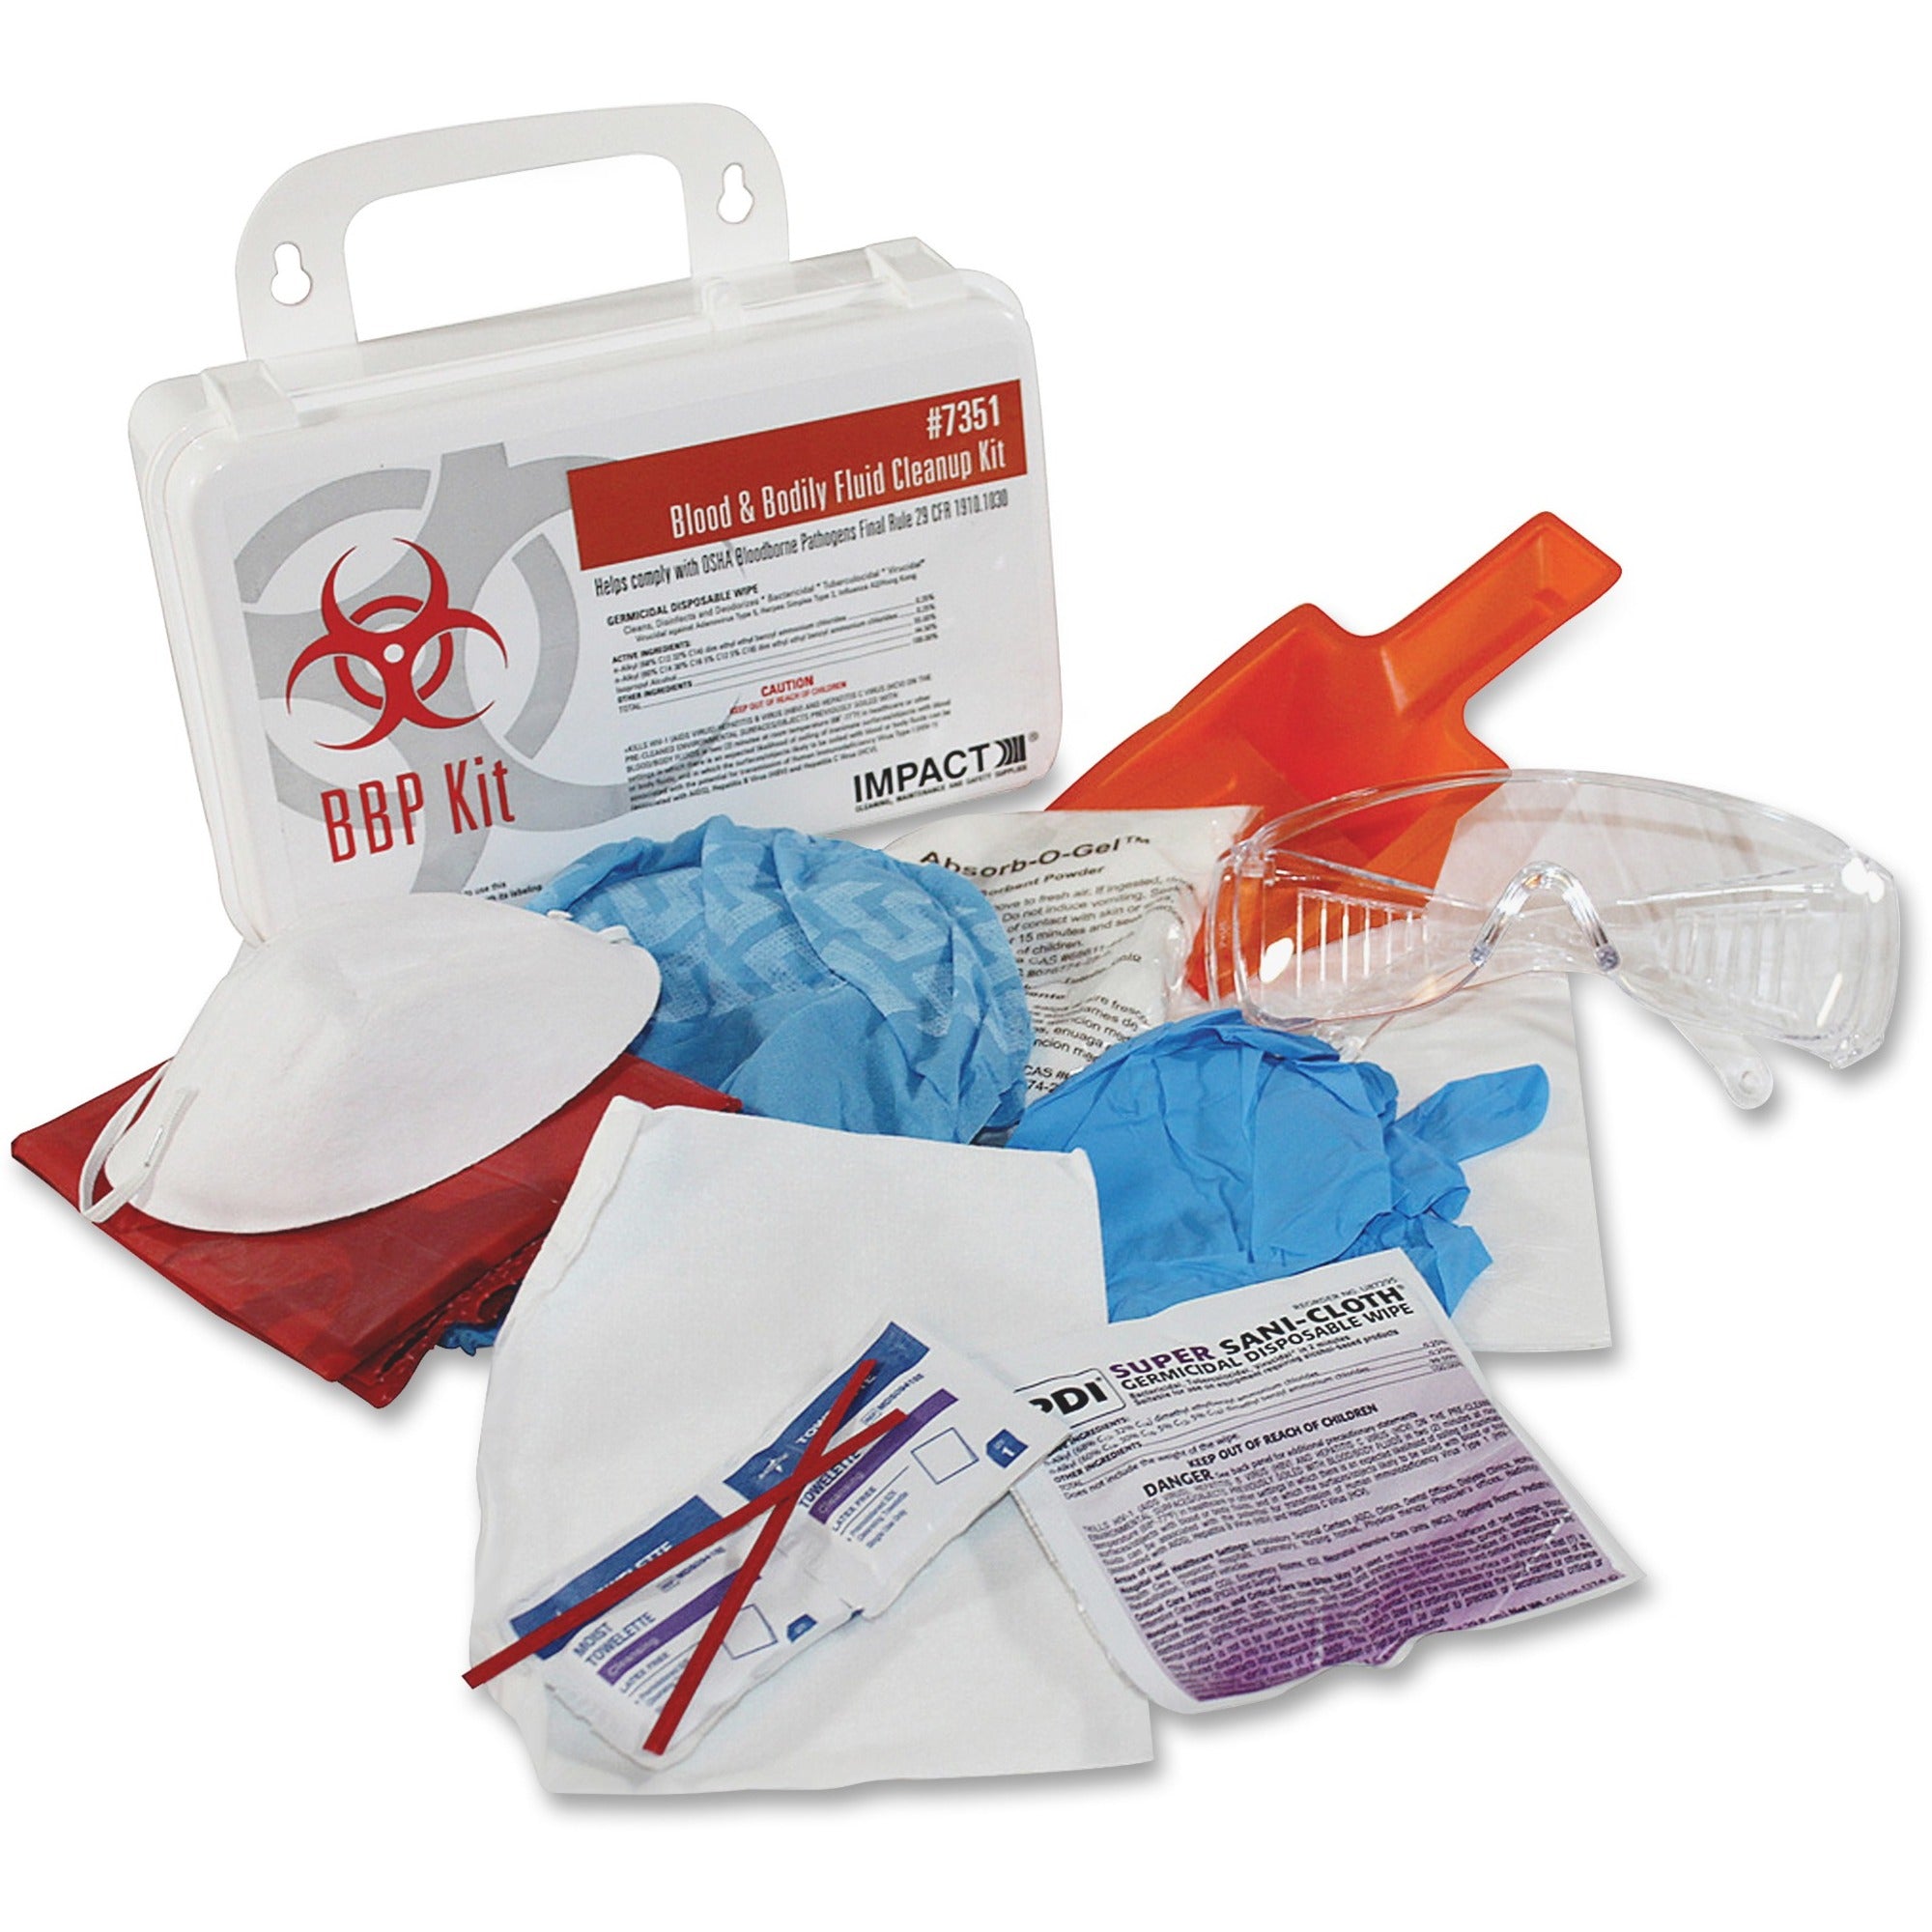 proguard-blood-bodily-fluid-cleanup-kits-6-carton_pgd7351ct - 1